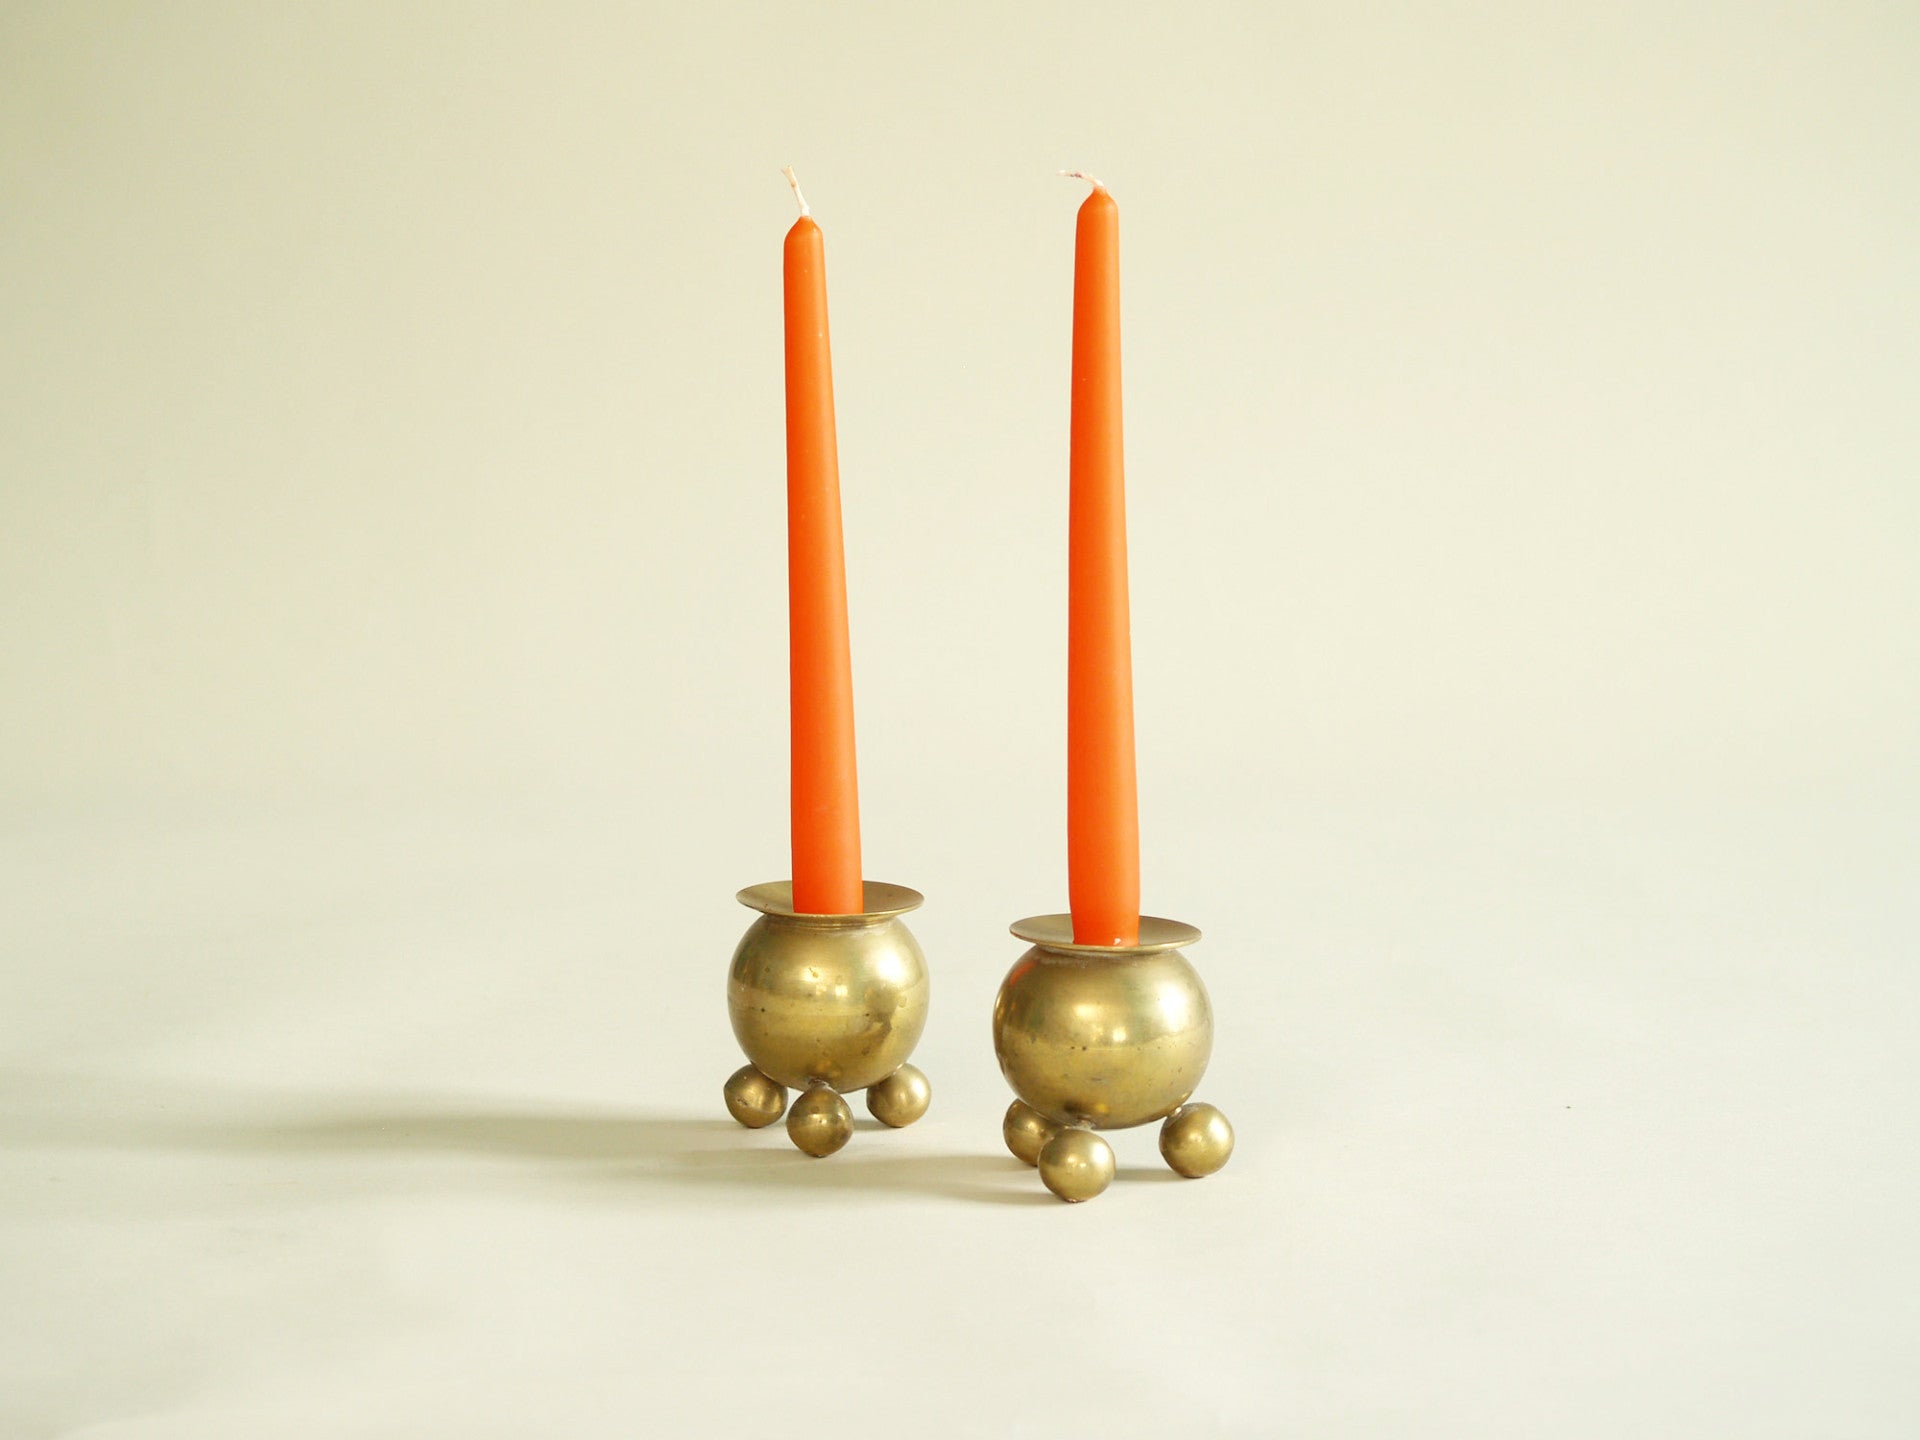 Paire de bougeoirs par Gusum Bruk, Suède (vers 1900)..Pair of candle holders by Gusum Bruk, Sweden (circa 1900)